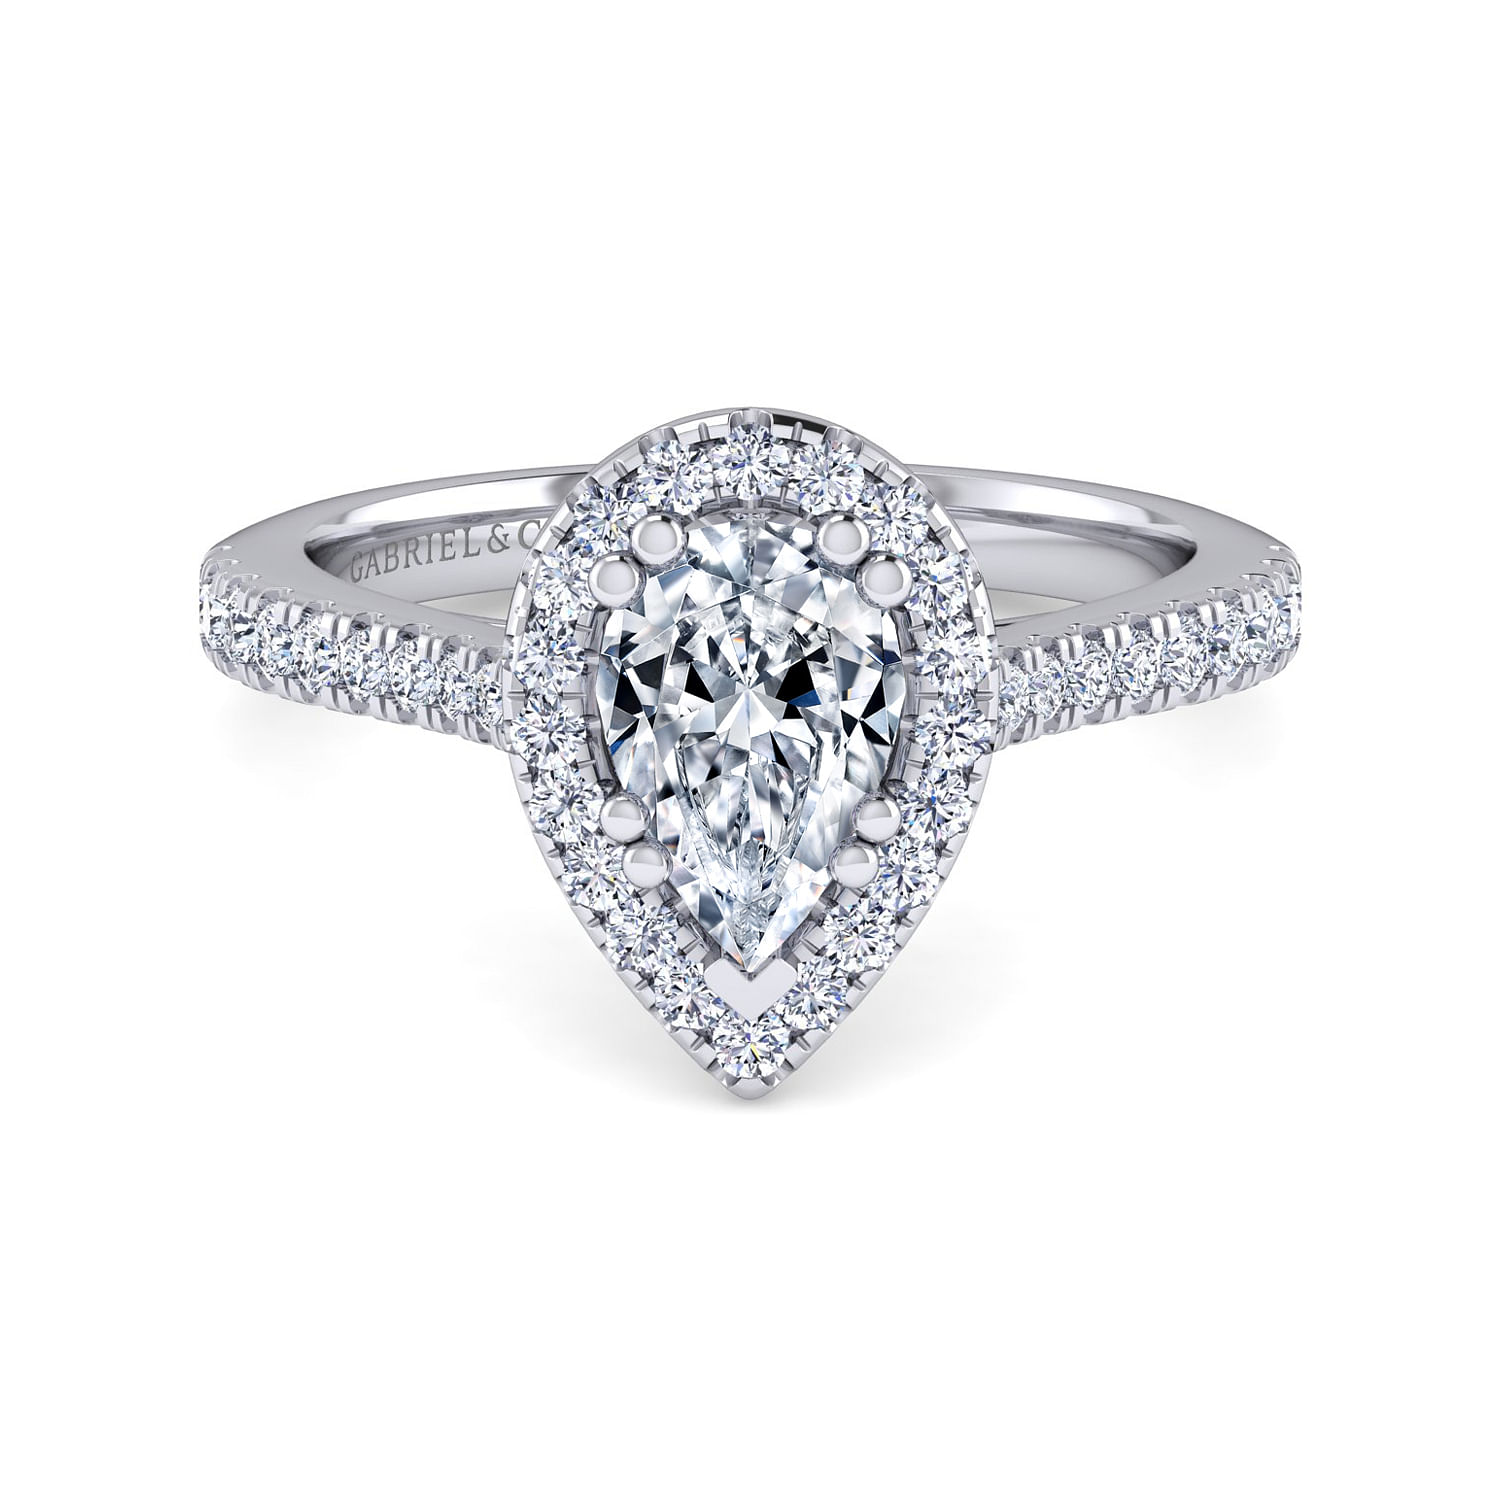 Michaela---14K-White-Gold-Pear-Shape-Halo-Diamond-Engagement-Ring1